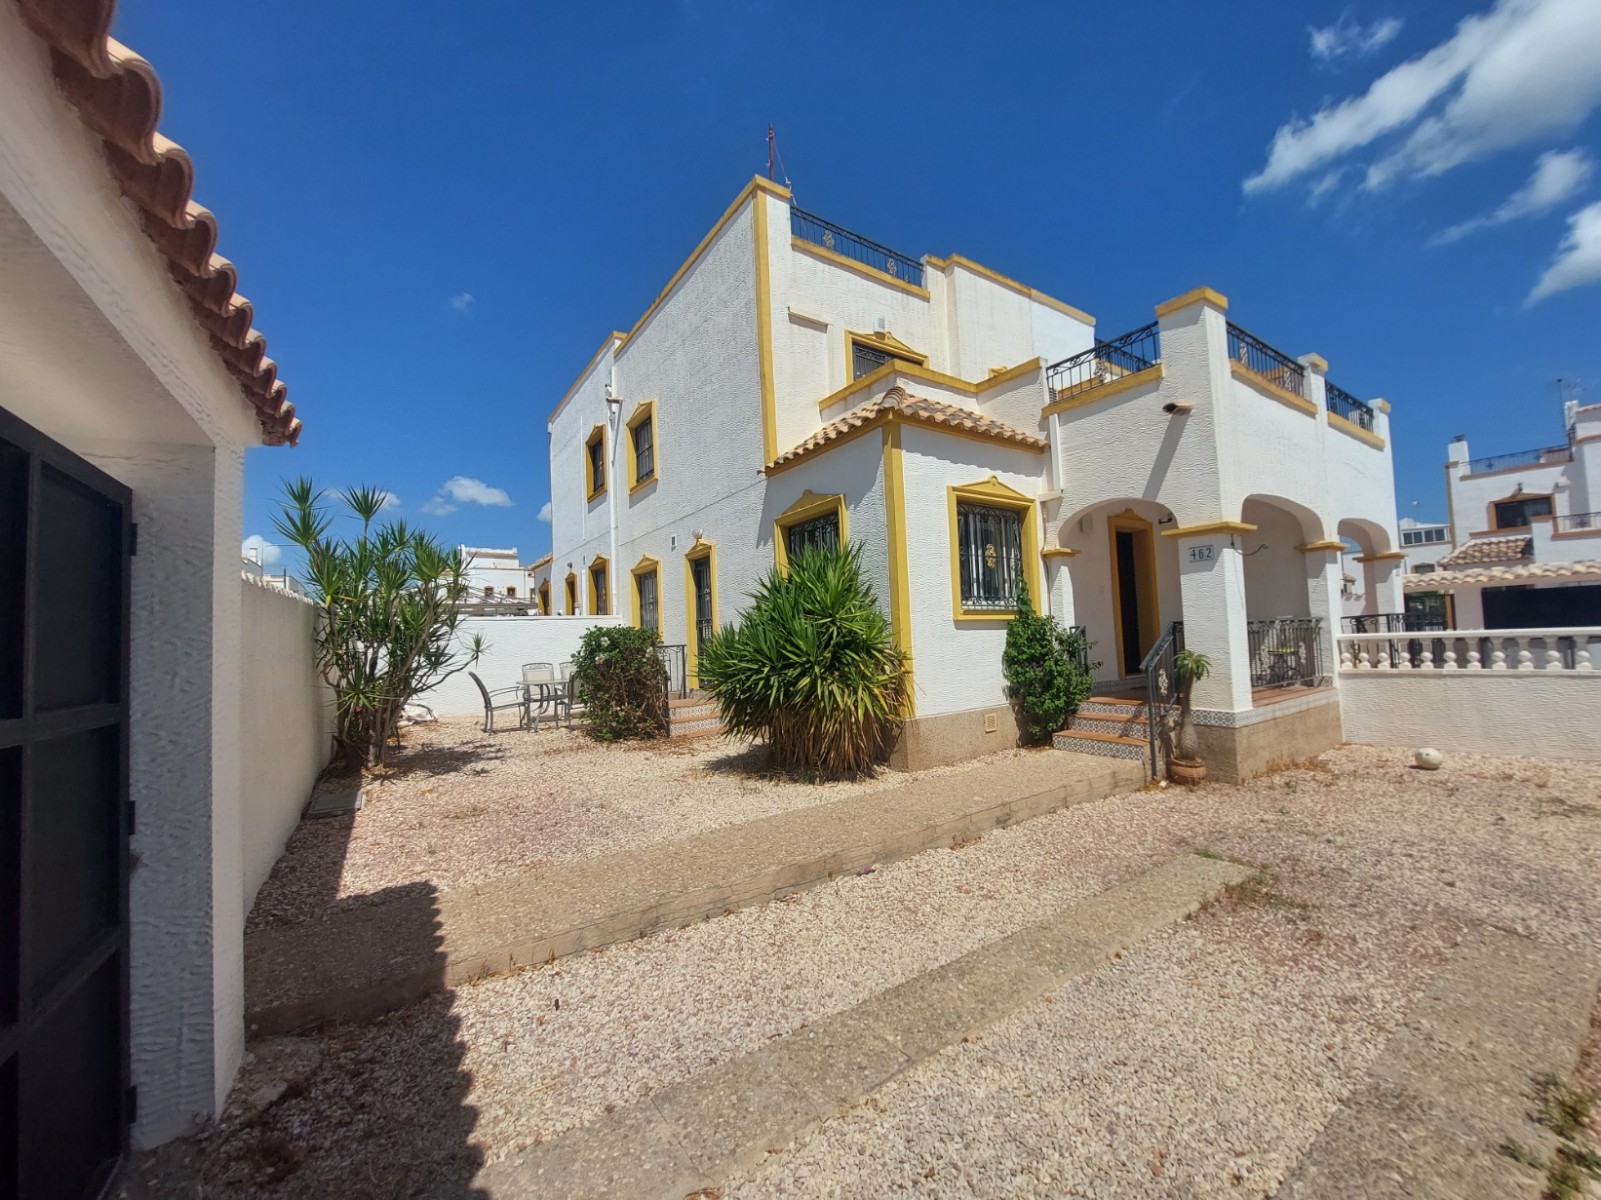 For sale: 3 bedroom house / villa in Orihuela